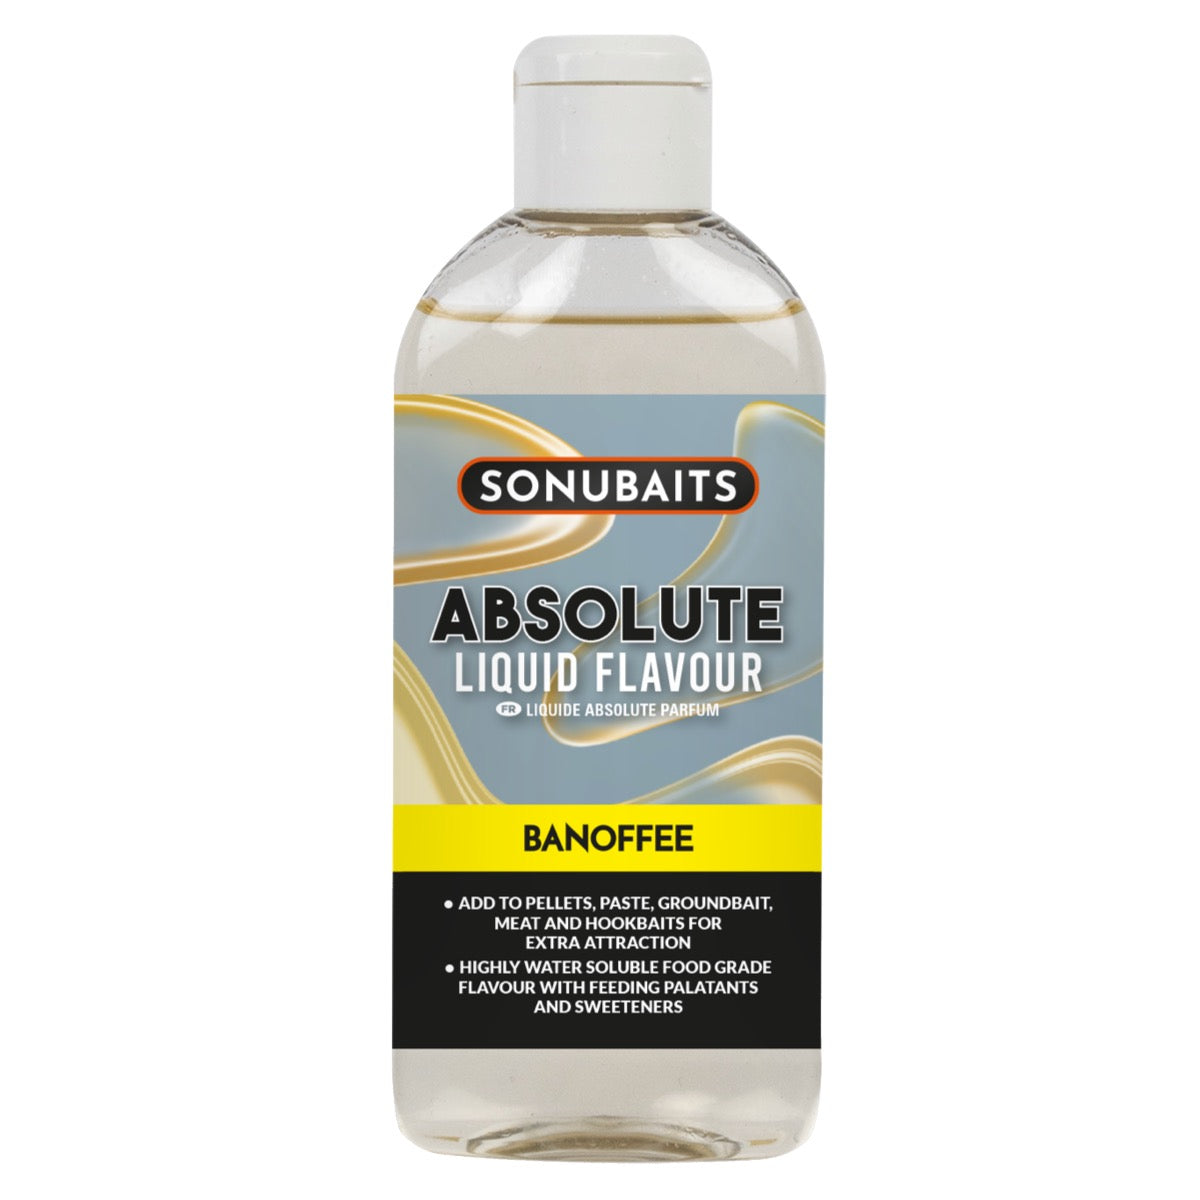 Sonubaits absolute liquid flavour Banoffee